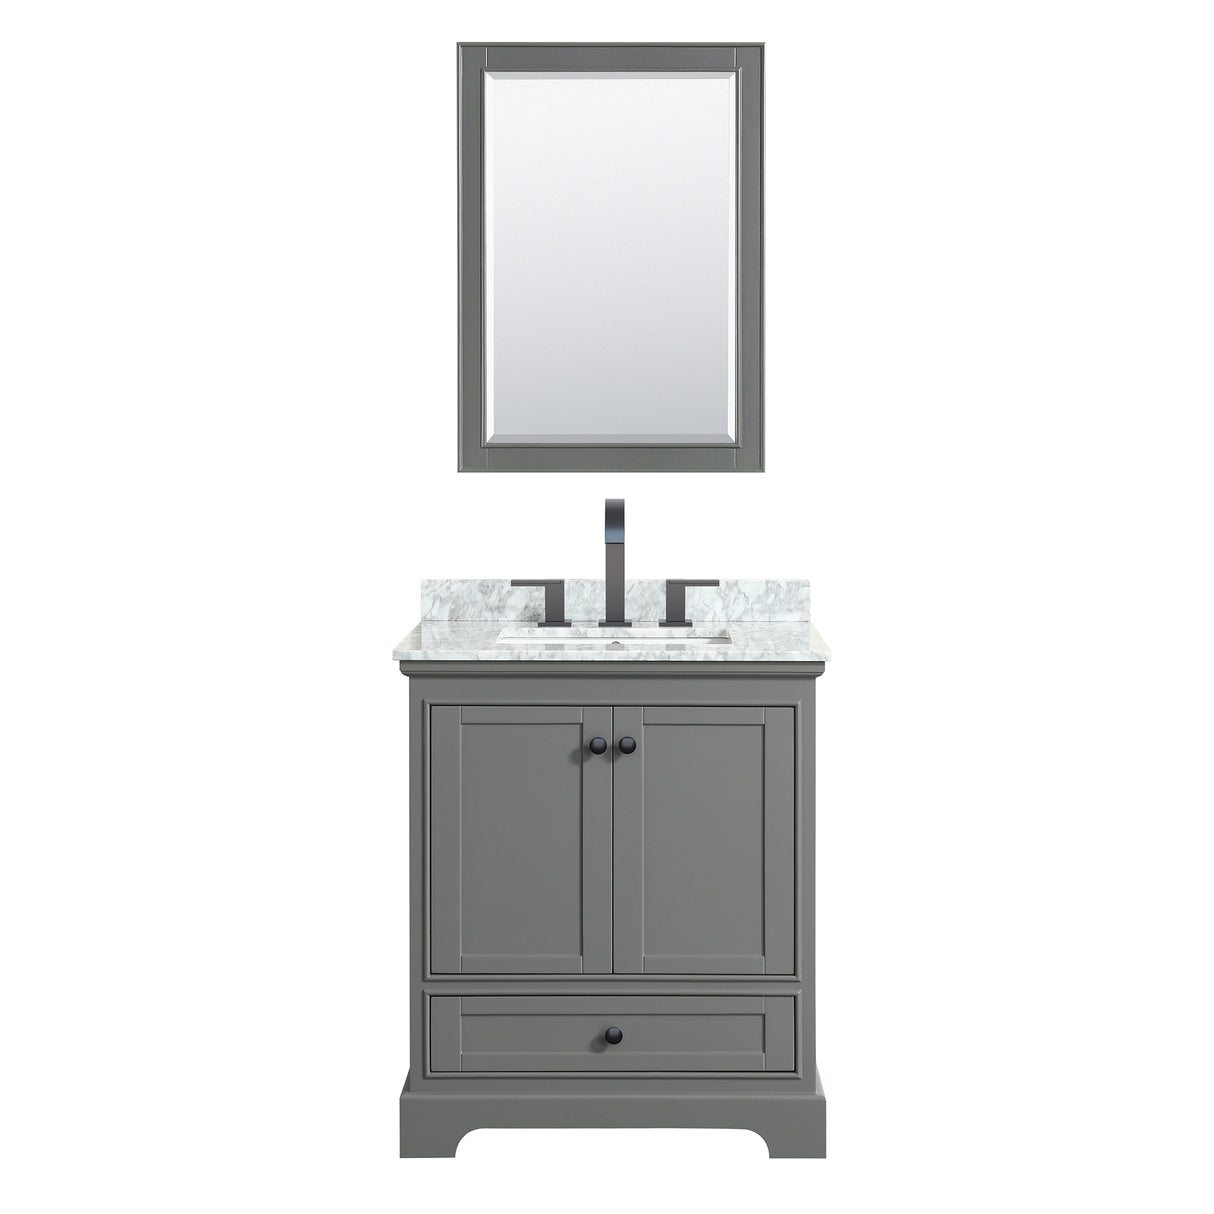 Deborah 30 Inch Single Bathroom Vanity in Dark Gray White Carrara Marble Countertop Undermount Square Sink Matte Black Trim Medicine Cabinet